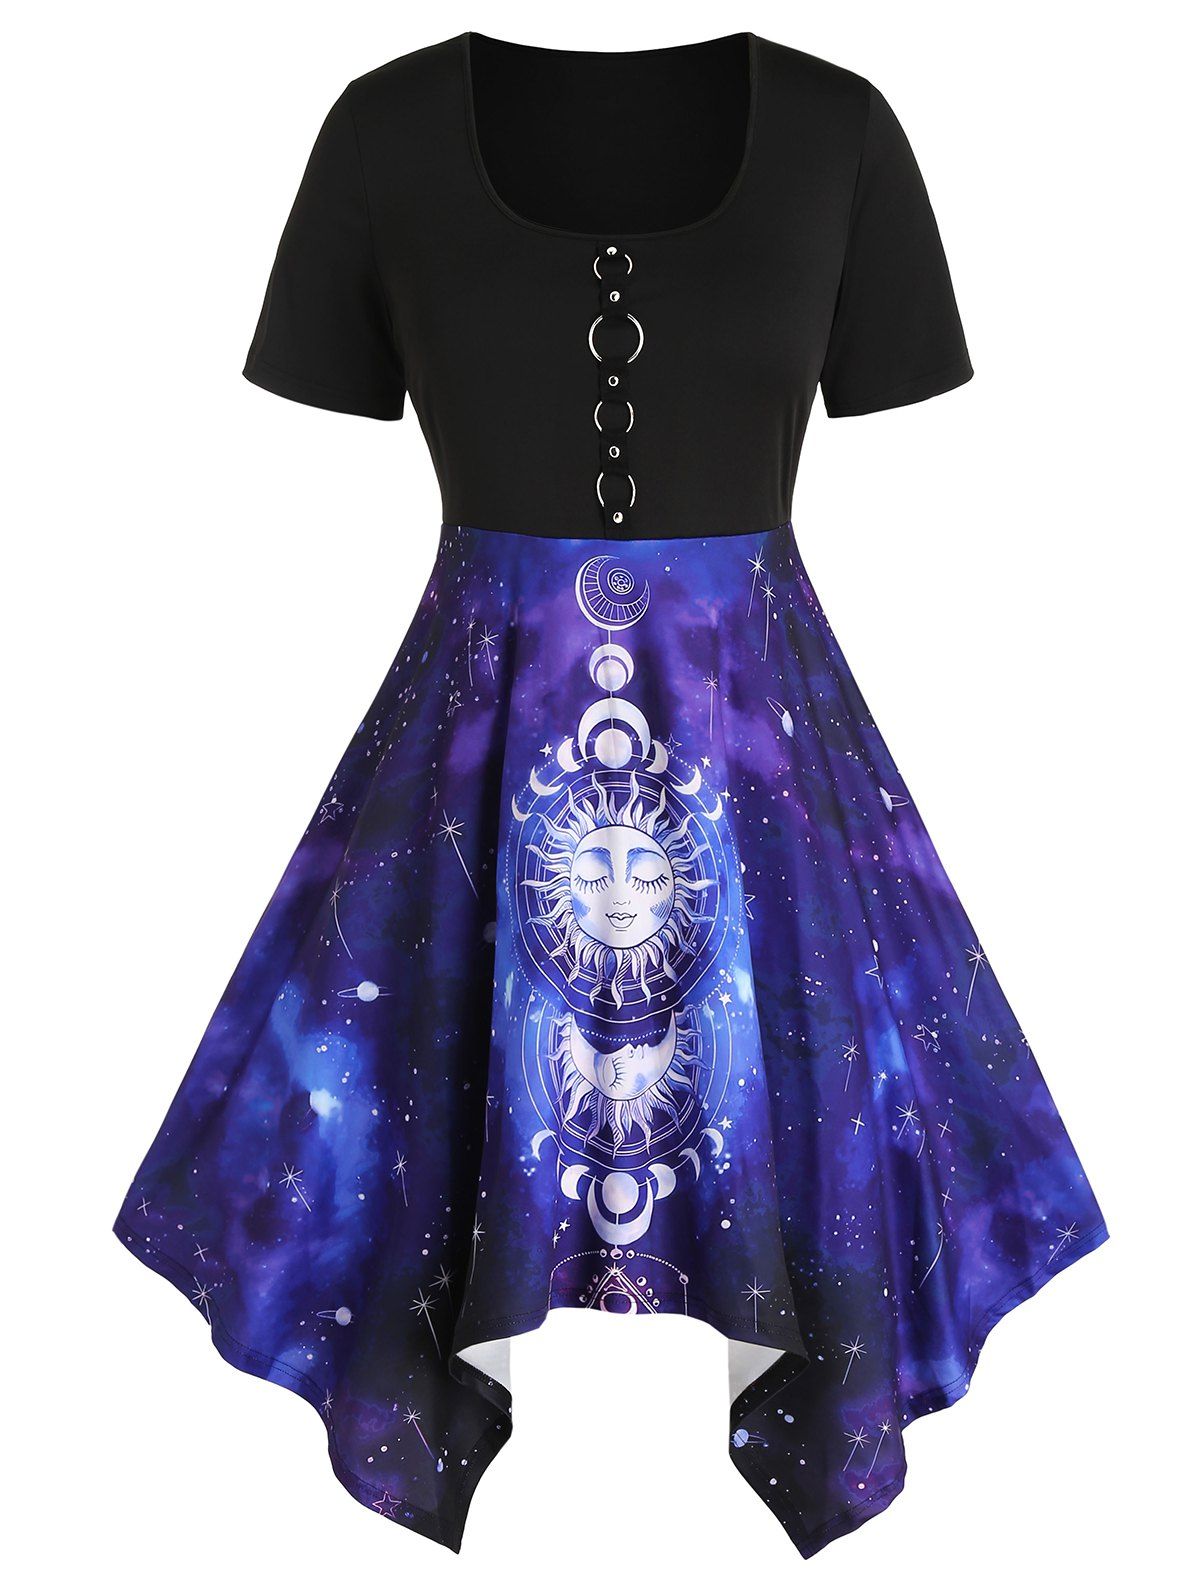 Plus Size & Curve Dress Celestial Sun And Moon Galaxy Print Dress O Ring Handkerchief Asymmetric Dress - BLACK L